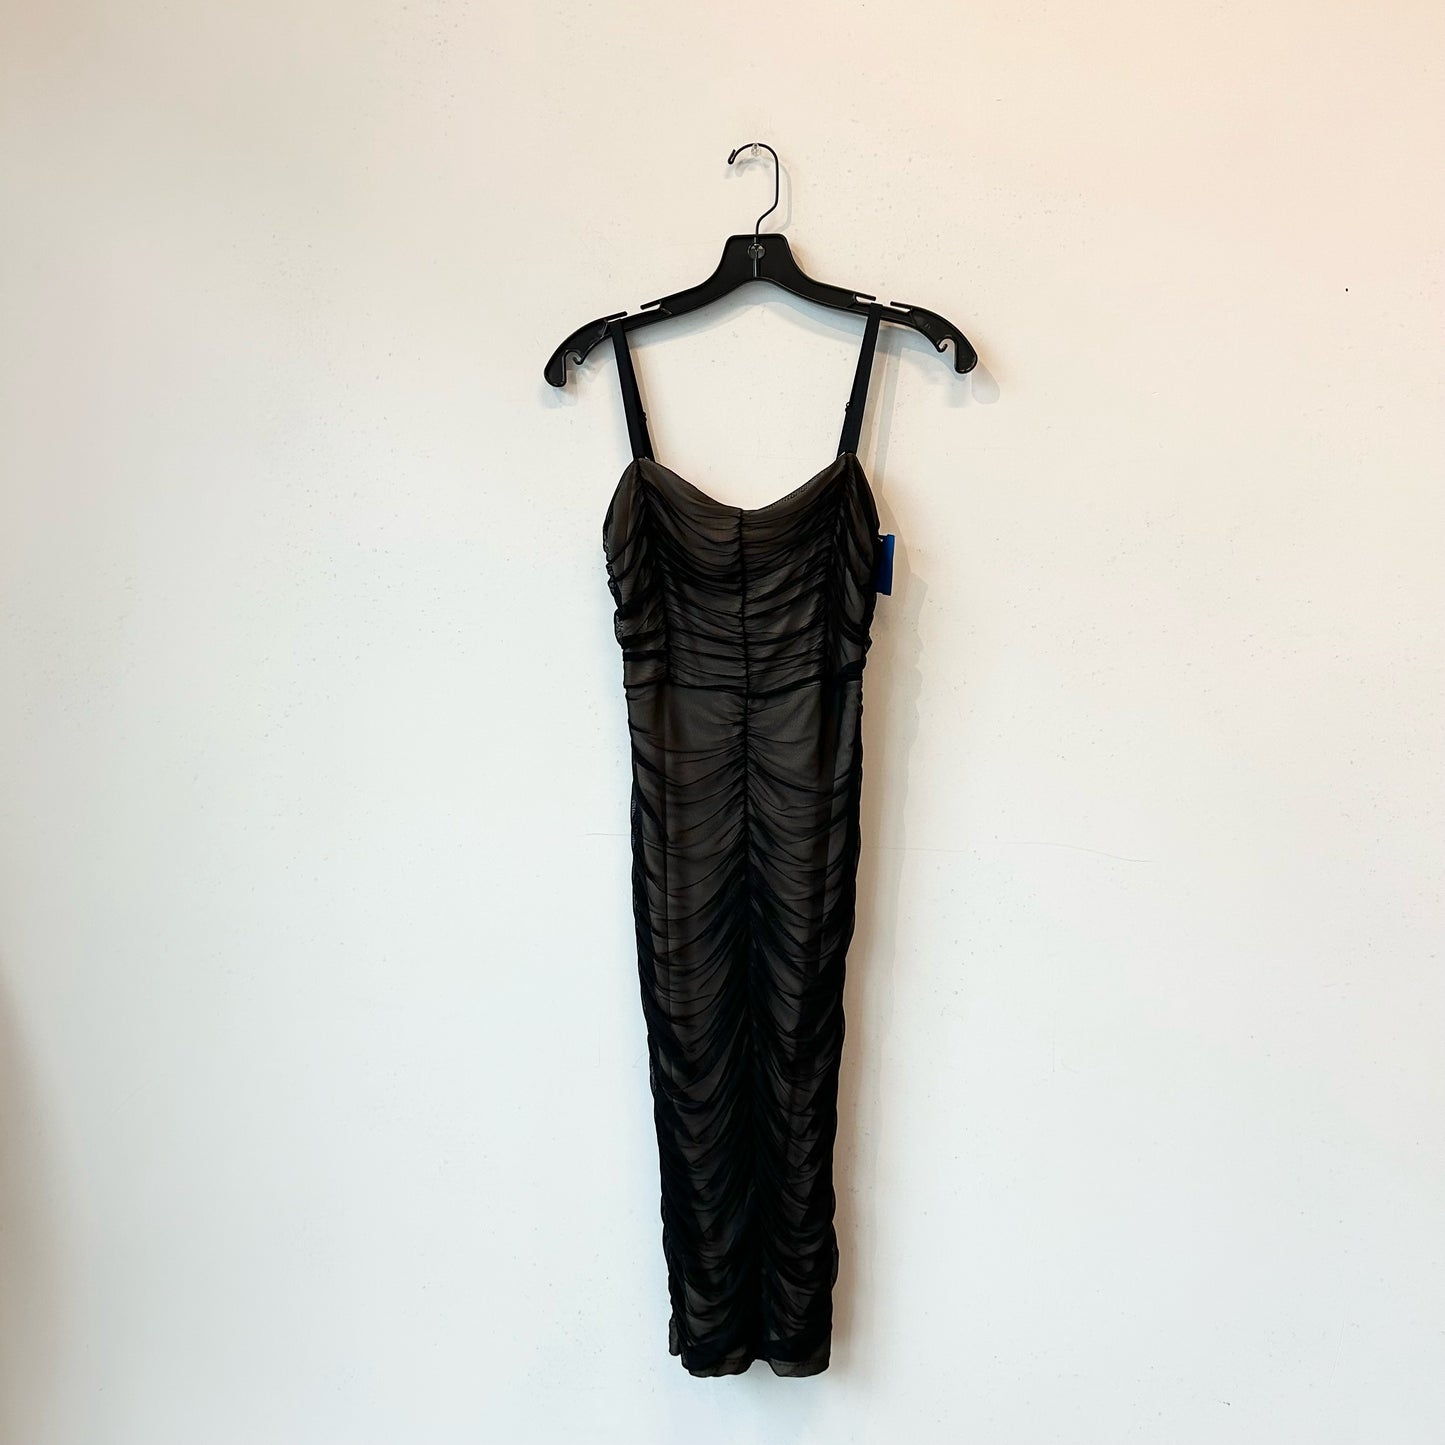 Size S Mesh Cami Black-Beige Dress